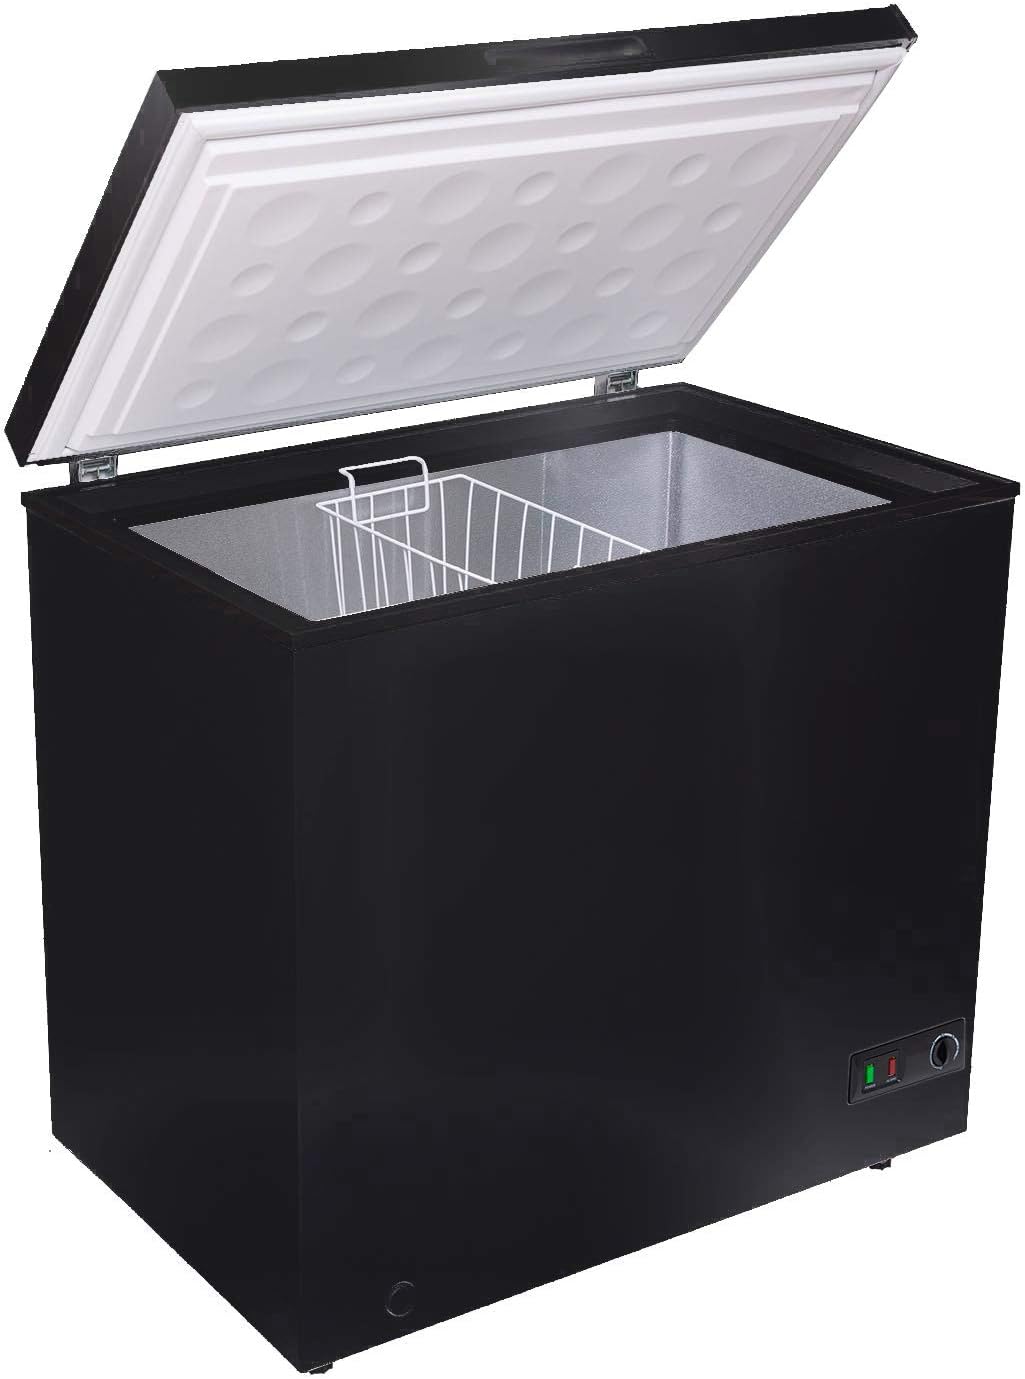 SIA CHF200B - AMZ1 Black Freestanding 201 Litre Large Capacity Chest Freezer, 4* Freezer Rating, 1 Year Manufacturers Guarantee, Aluminium Interior, 7 Temperature Settings, Classic Design - Amazing Gadgets Outlet